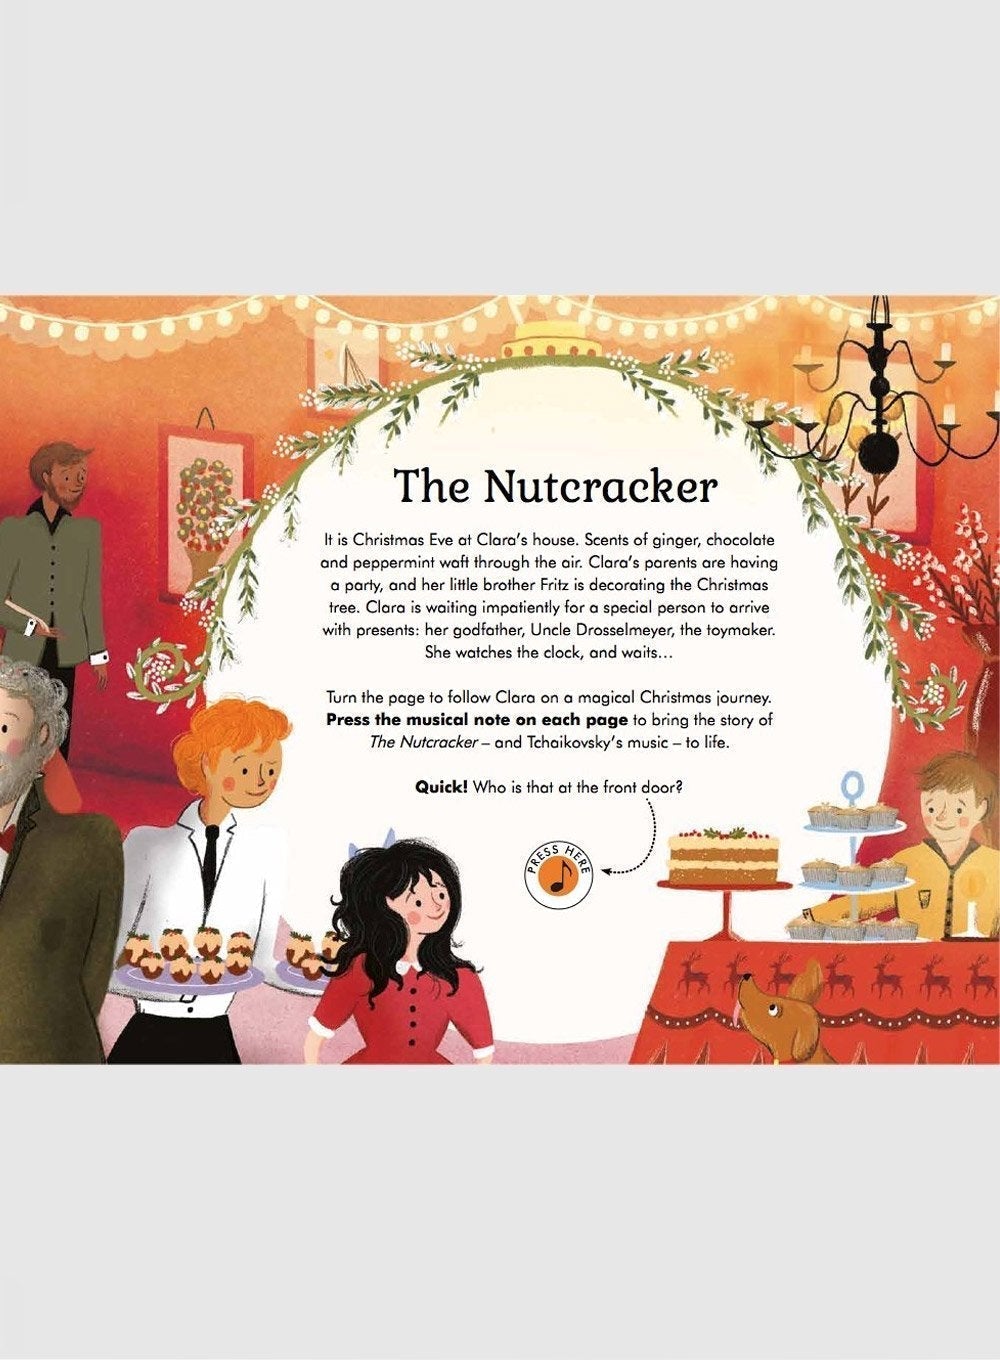 Katy Flint Book The Story Orchestra: The Nutcracker Hardback Book